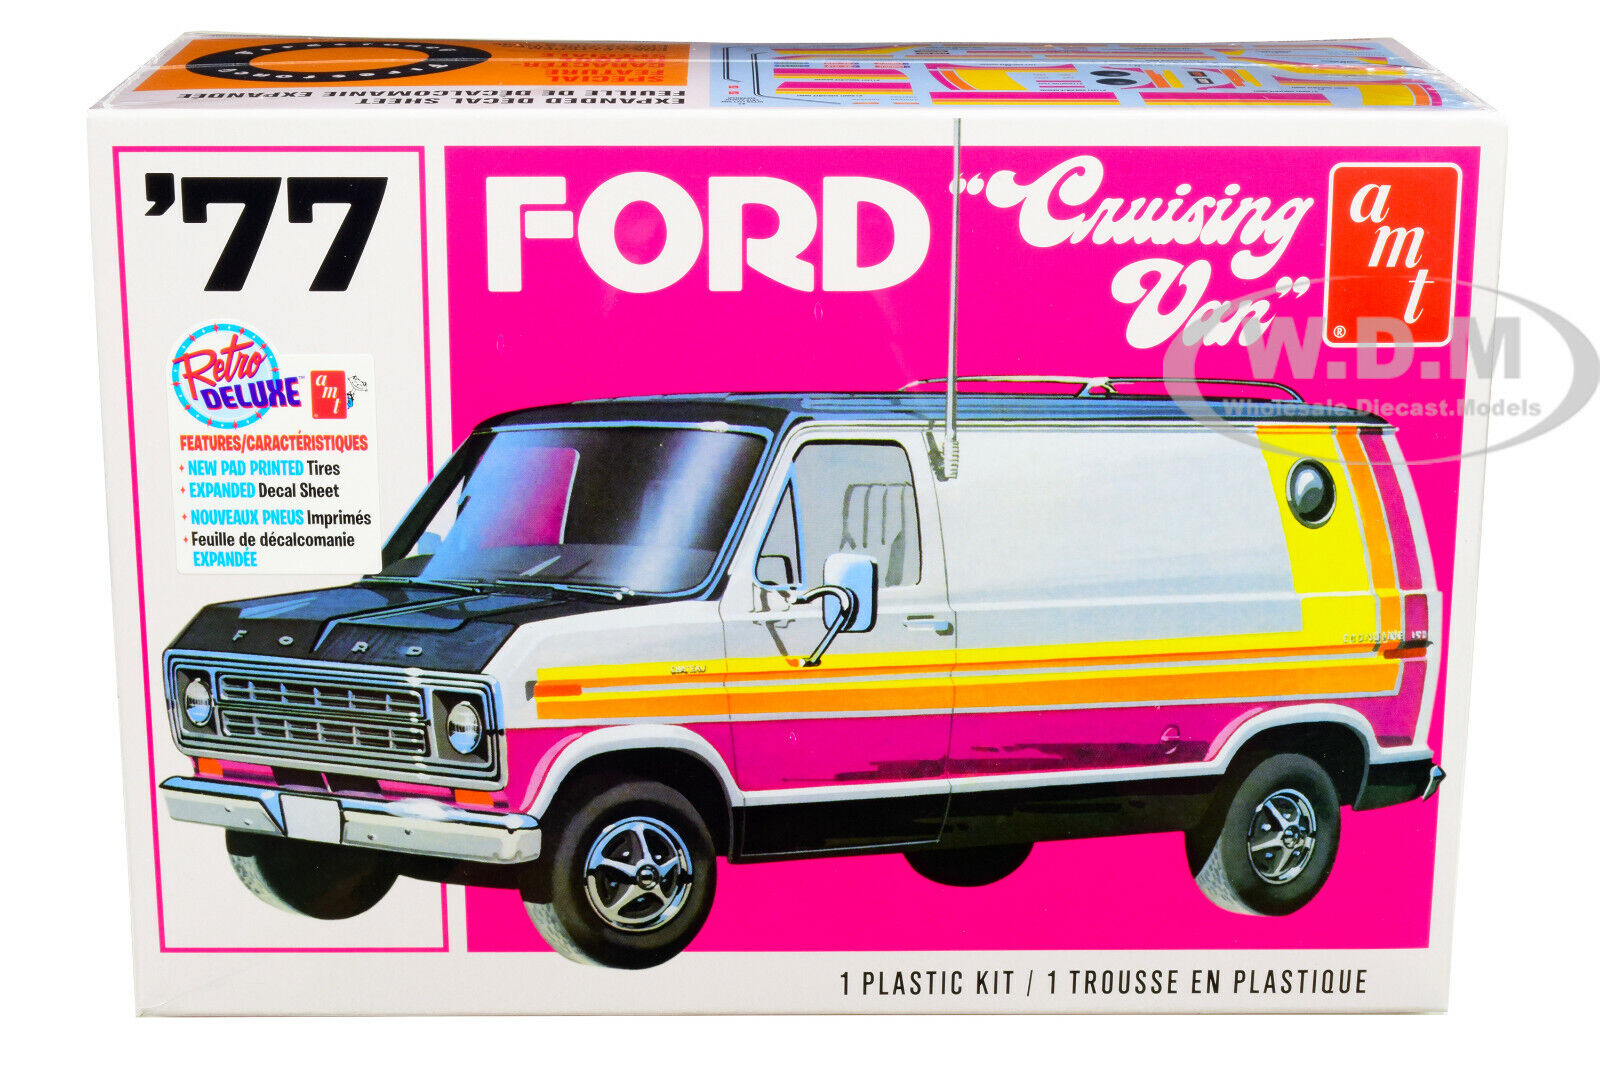 AMT 1108 1/25 1977 Ford Cruising Van